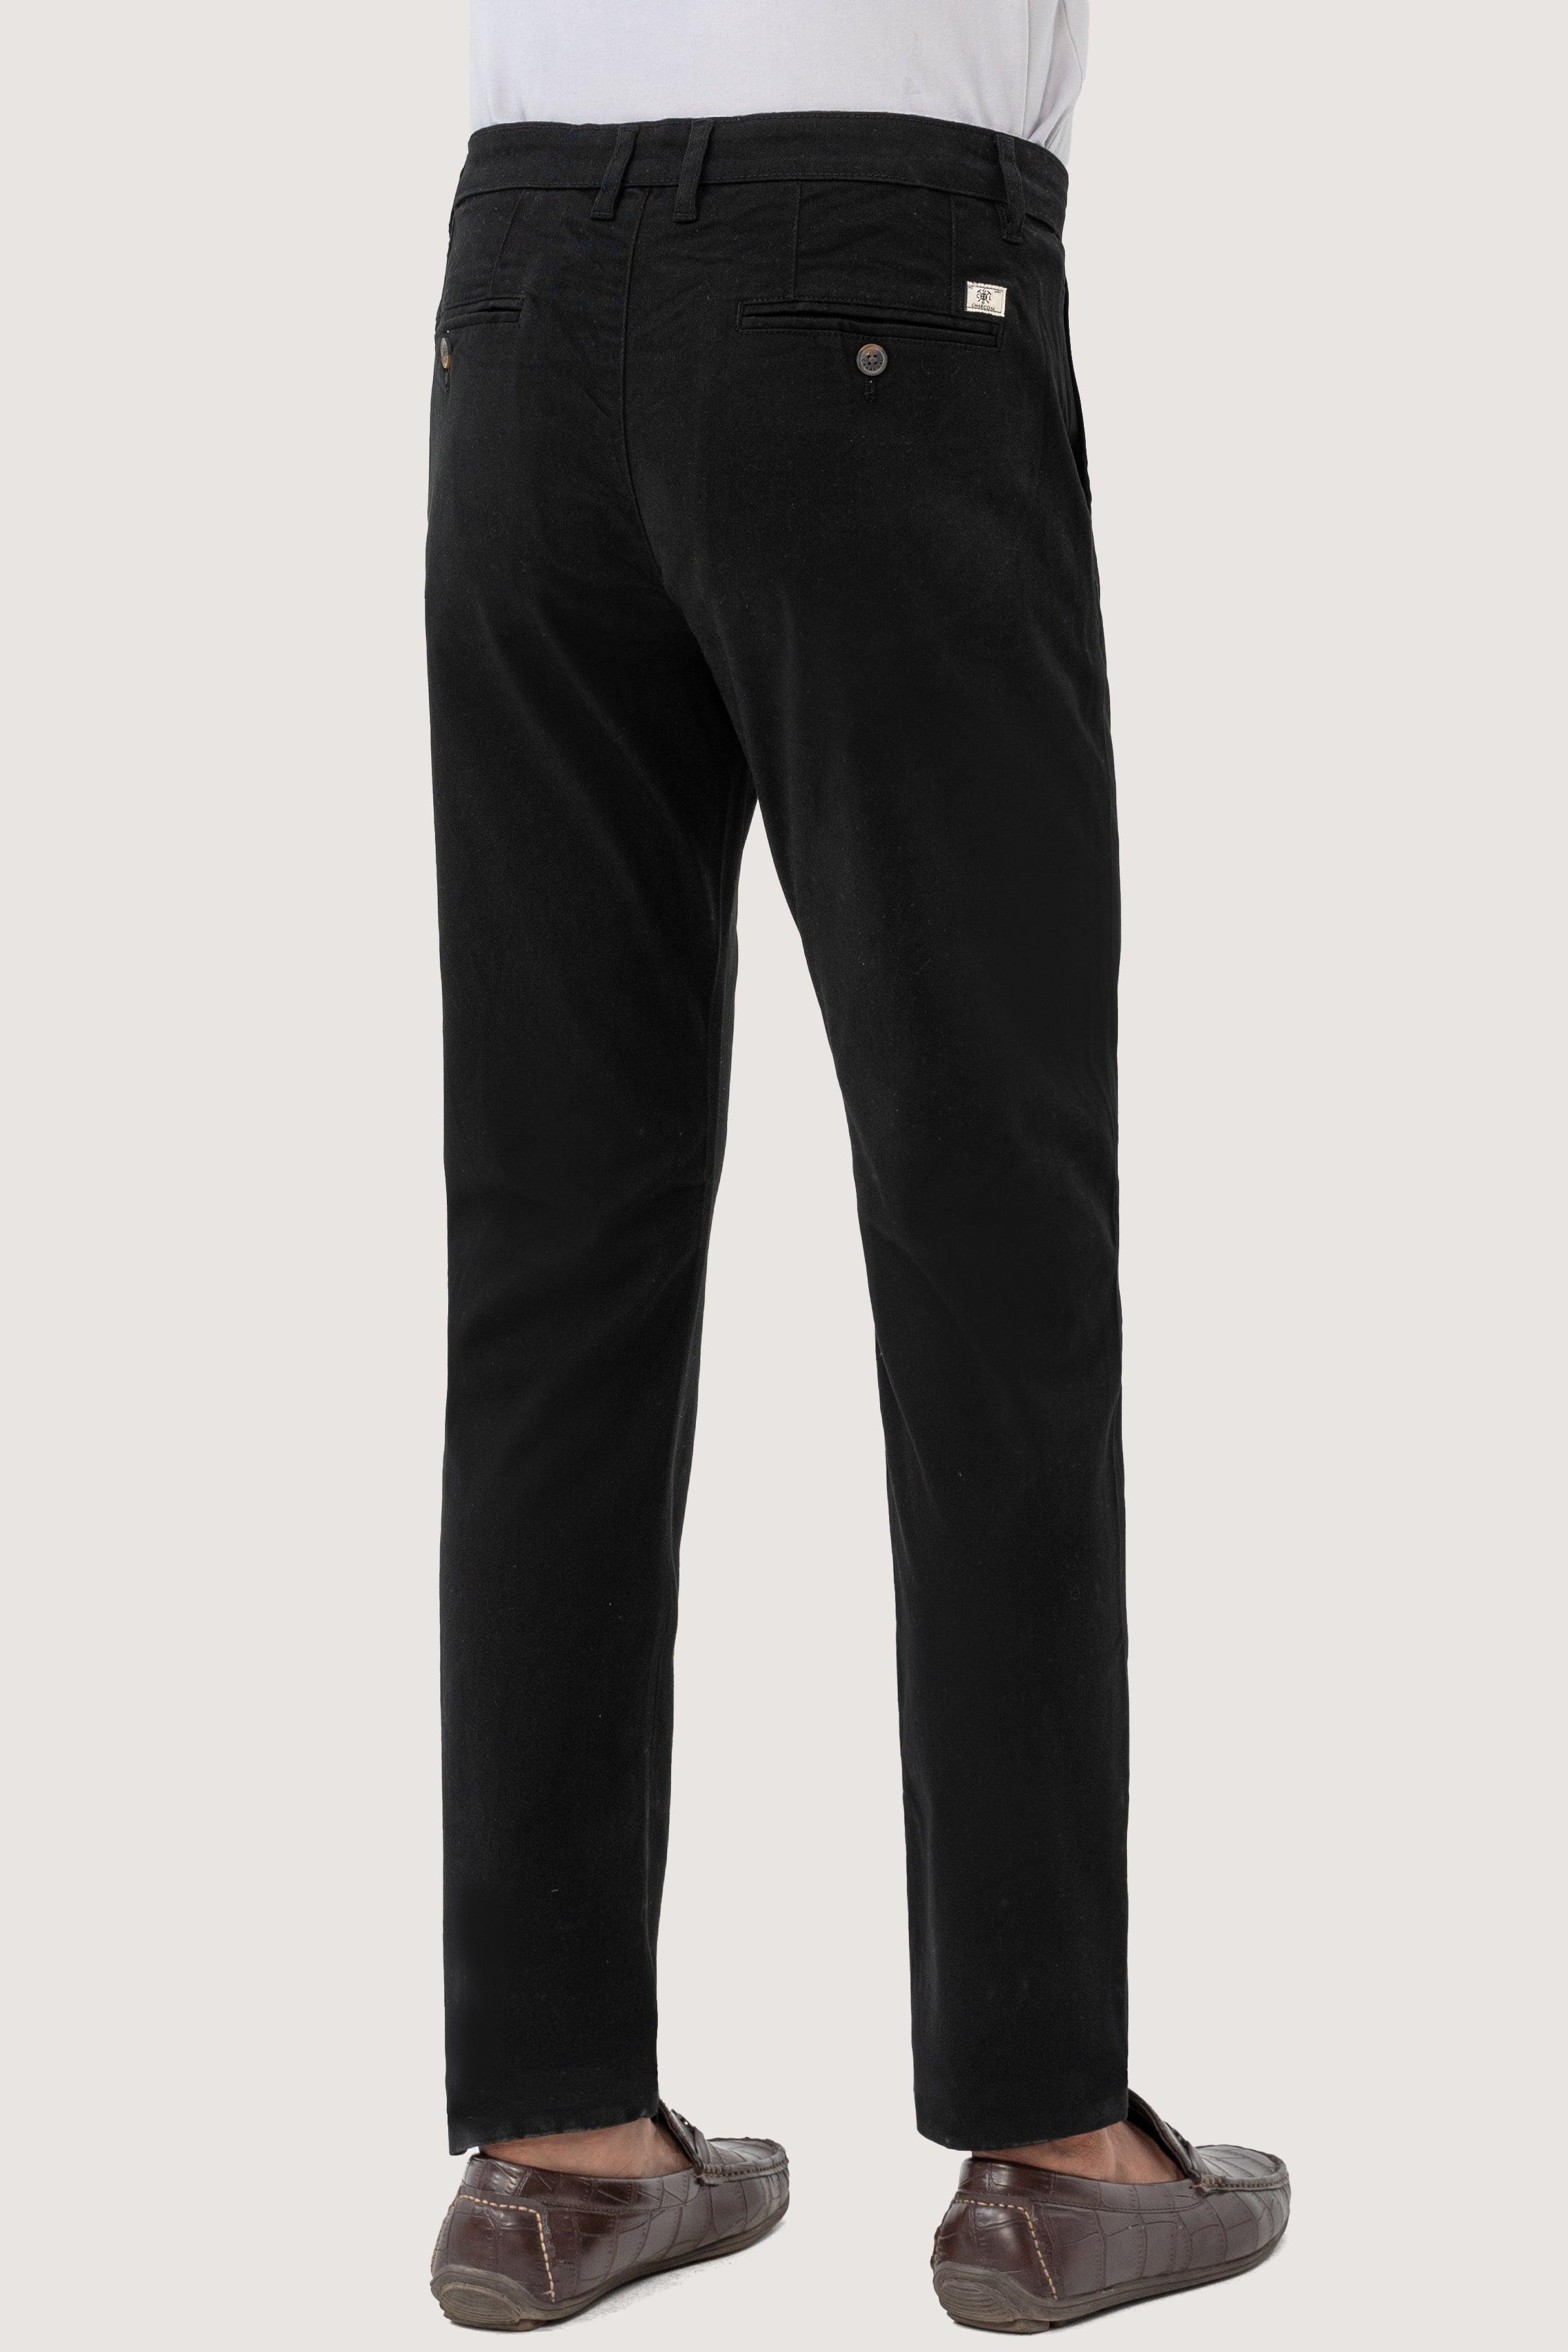 CROSS POCKET TWILL SLIMFIT PANT BLACK at Charcoal Clothing